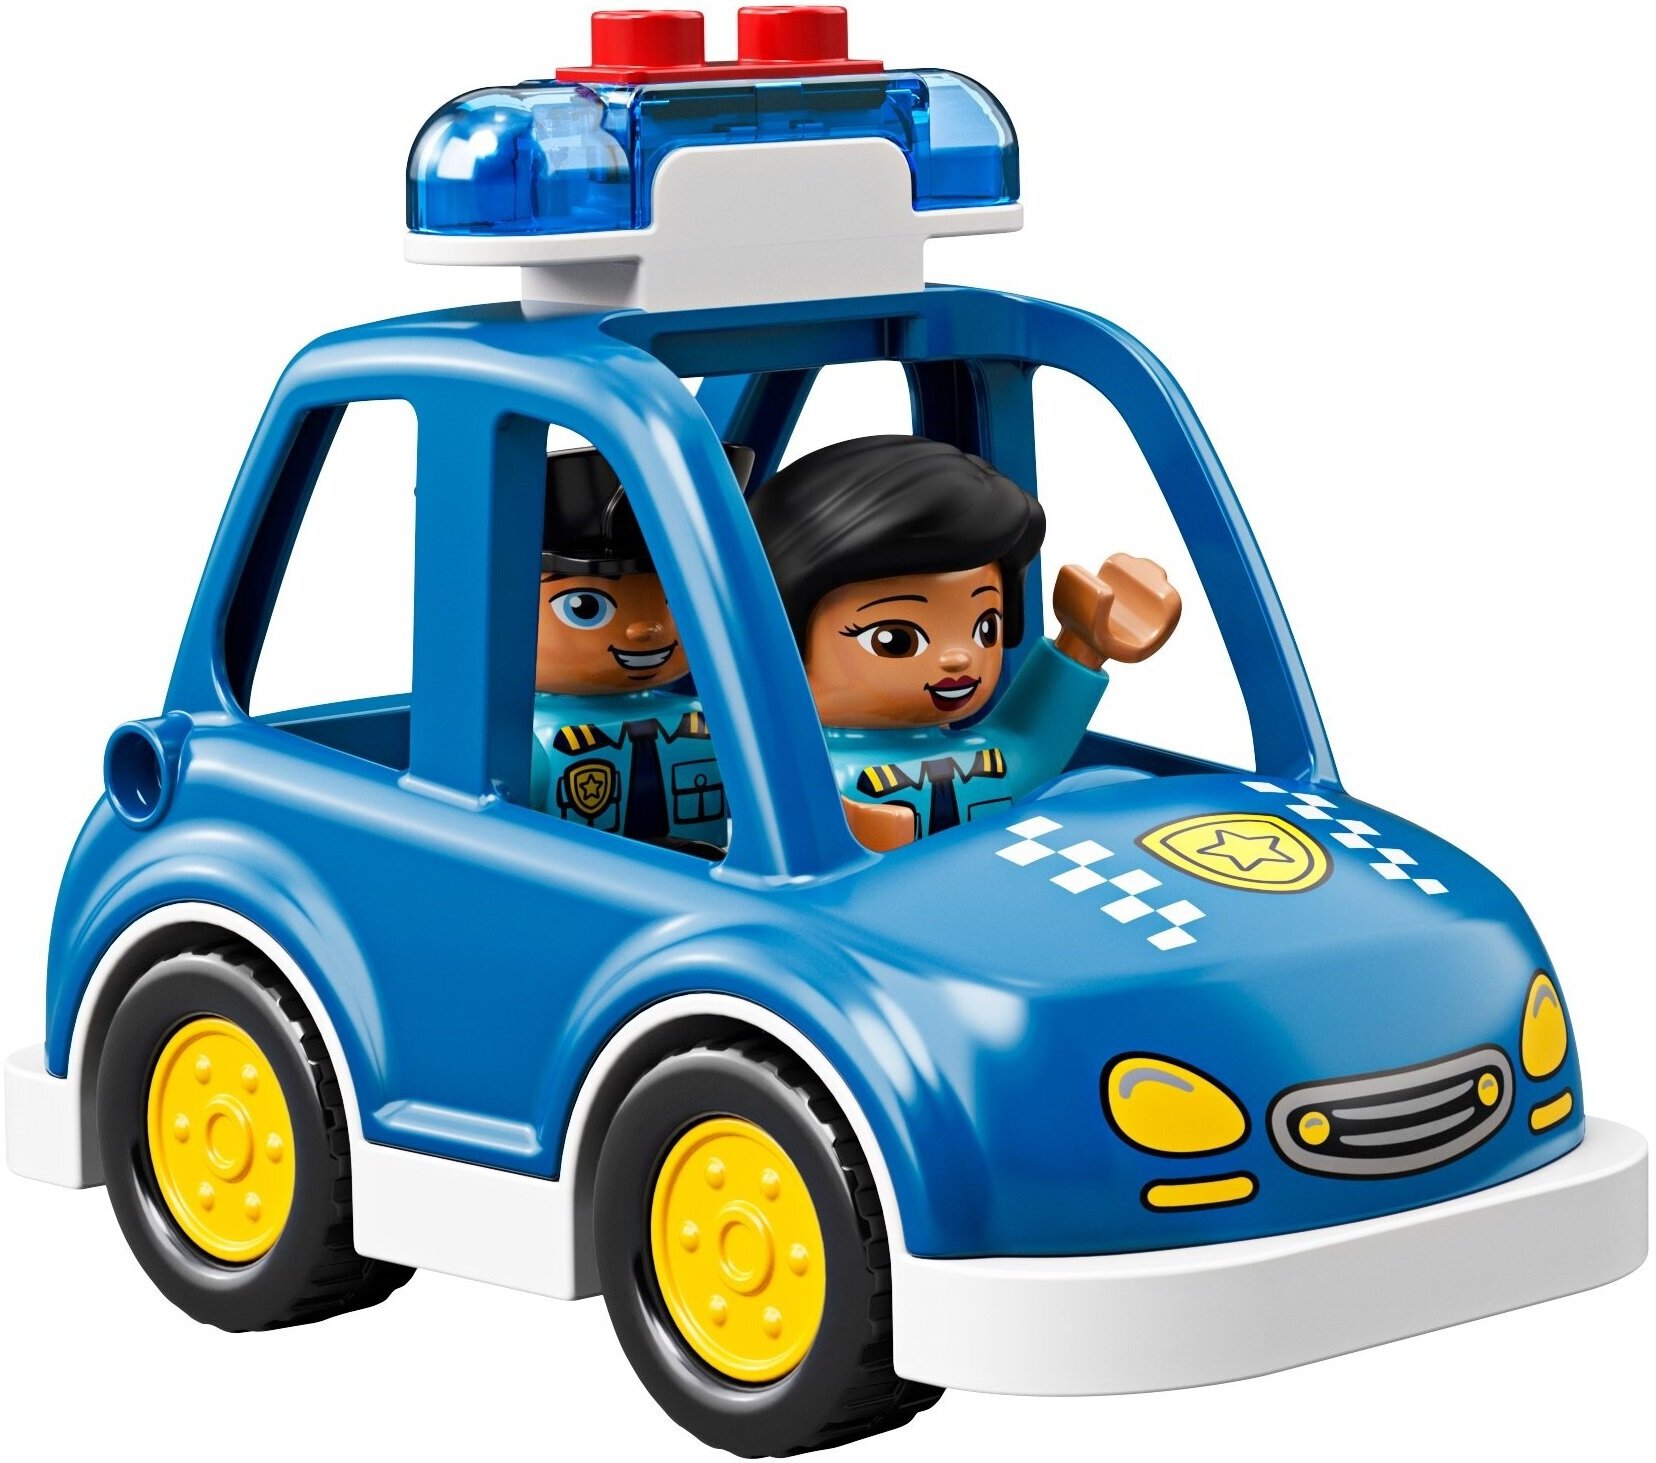 Lego Duplo Town 10902 Полицейский участок Конструктор - фото №16